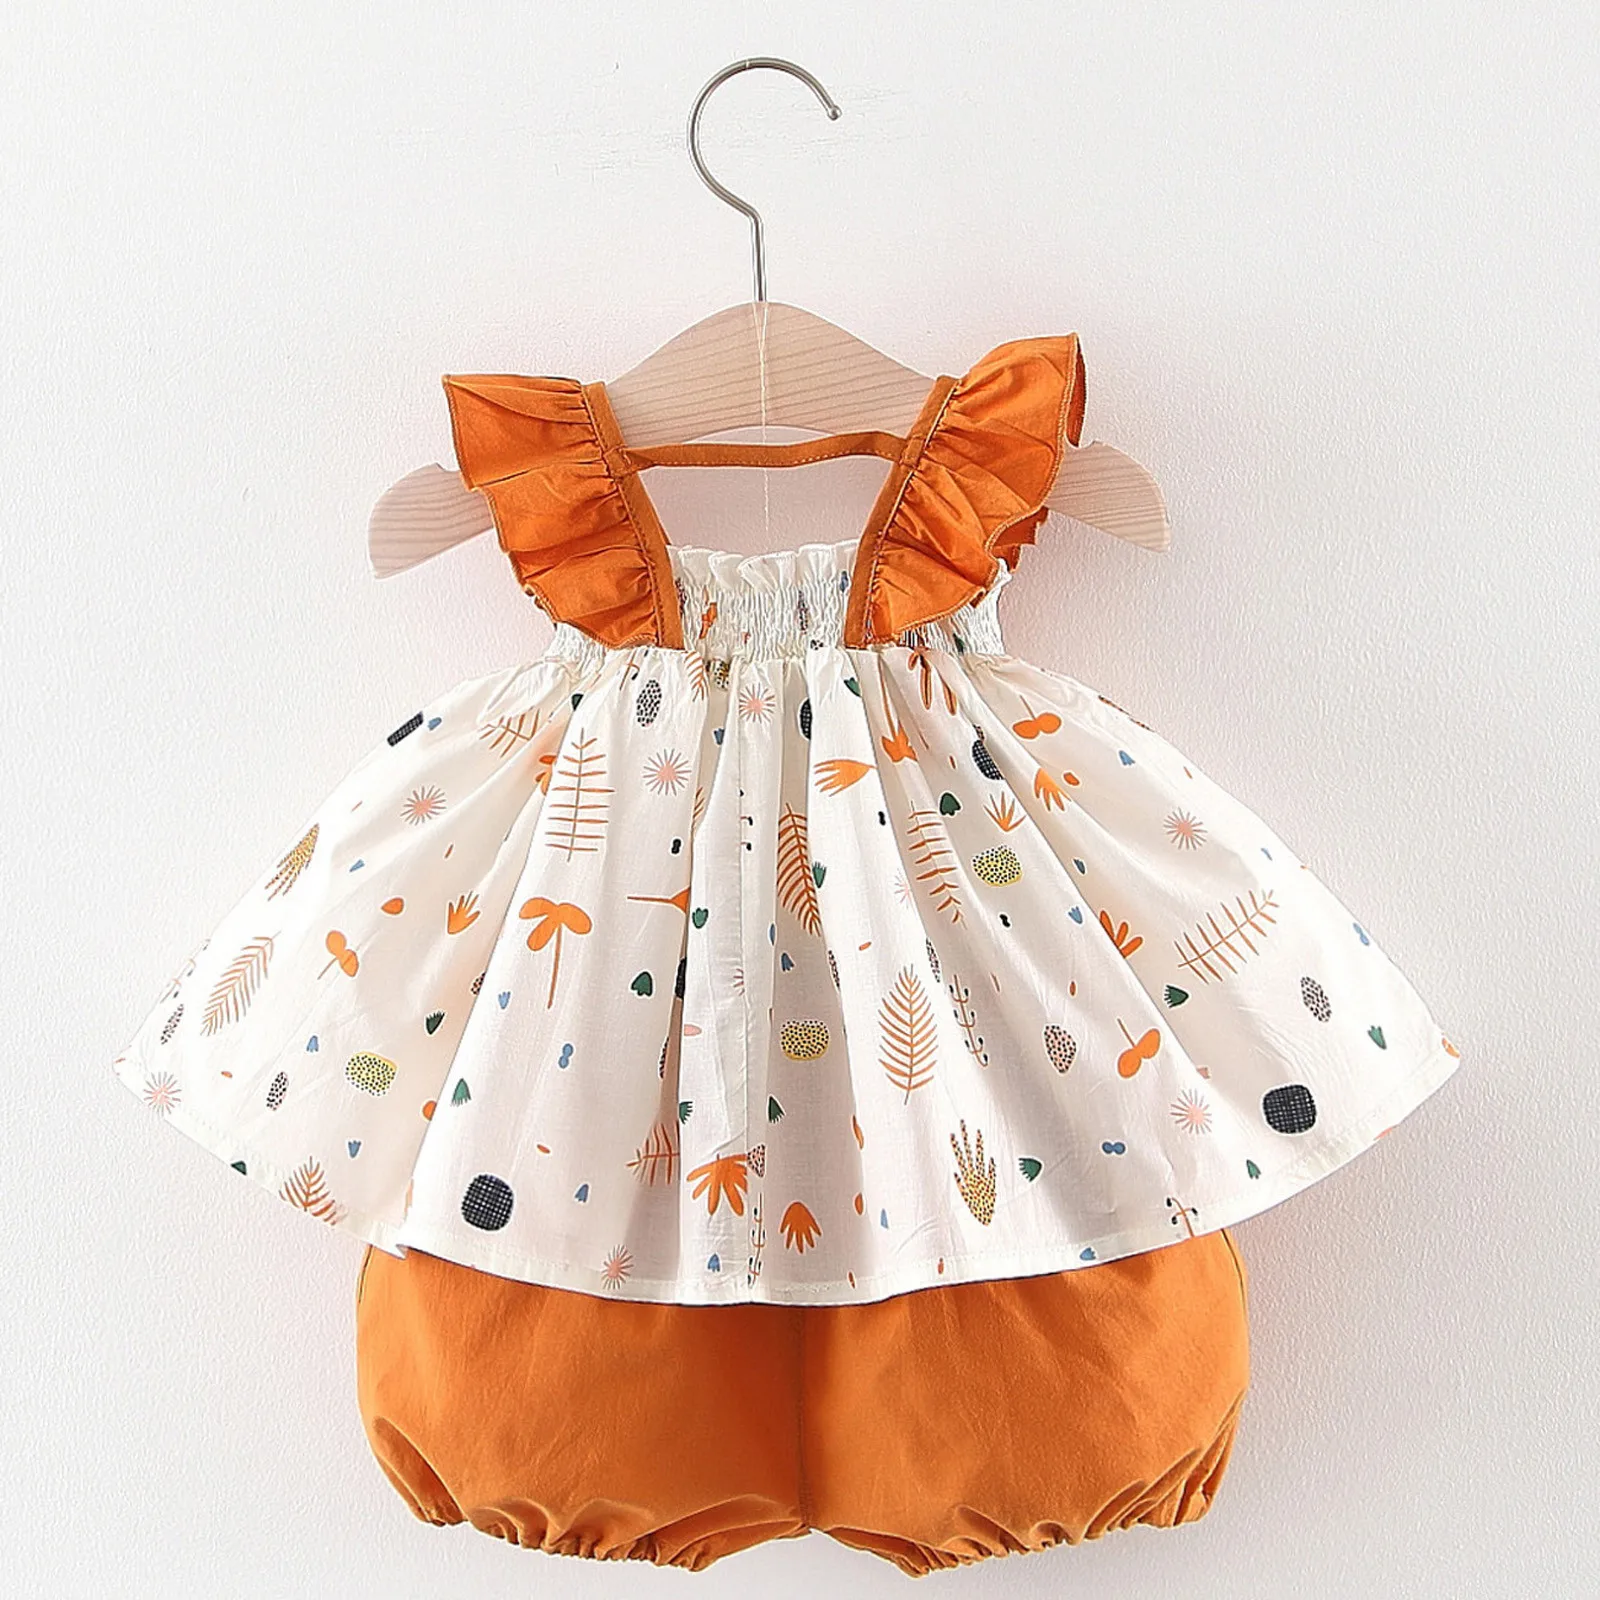 

Infant Baby Girls Suspenders Print Dress Tops Shorts Outfits Set Summer Sunsuit Clothes Sets Sleeveless Dress+briefs 2pcs 6-12 M